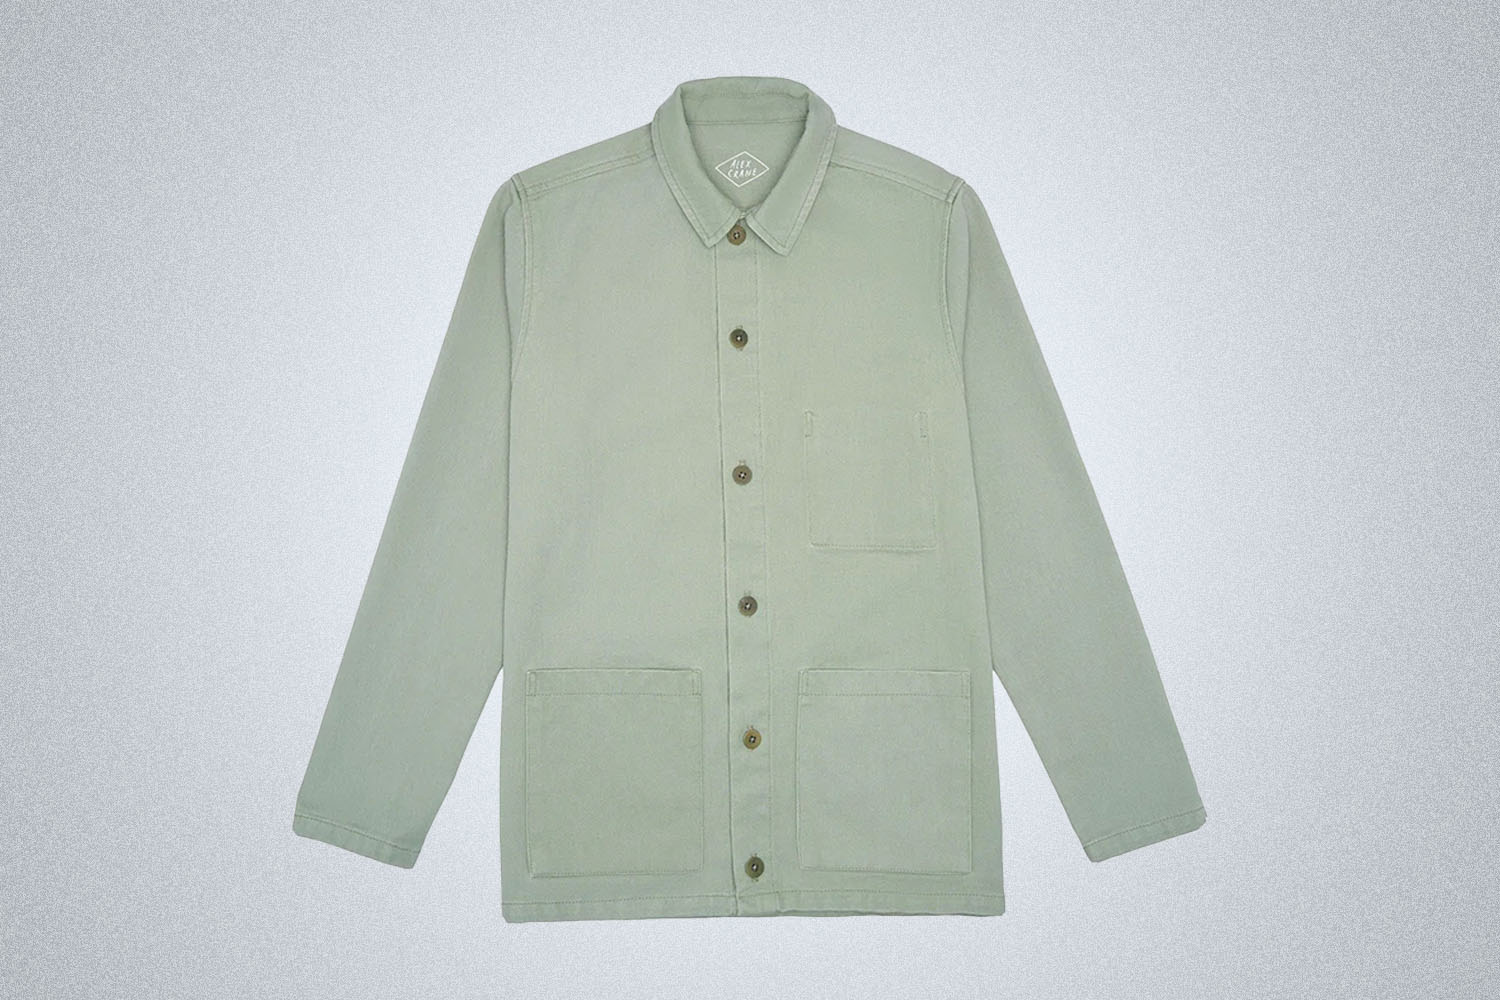 a light green Alex Crane Chore Coat on a grey background